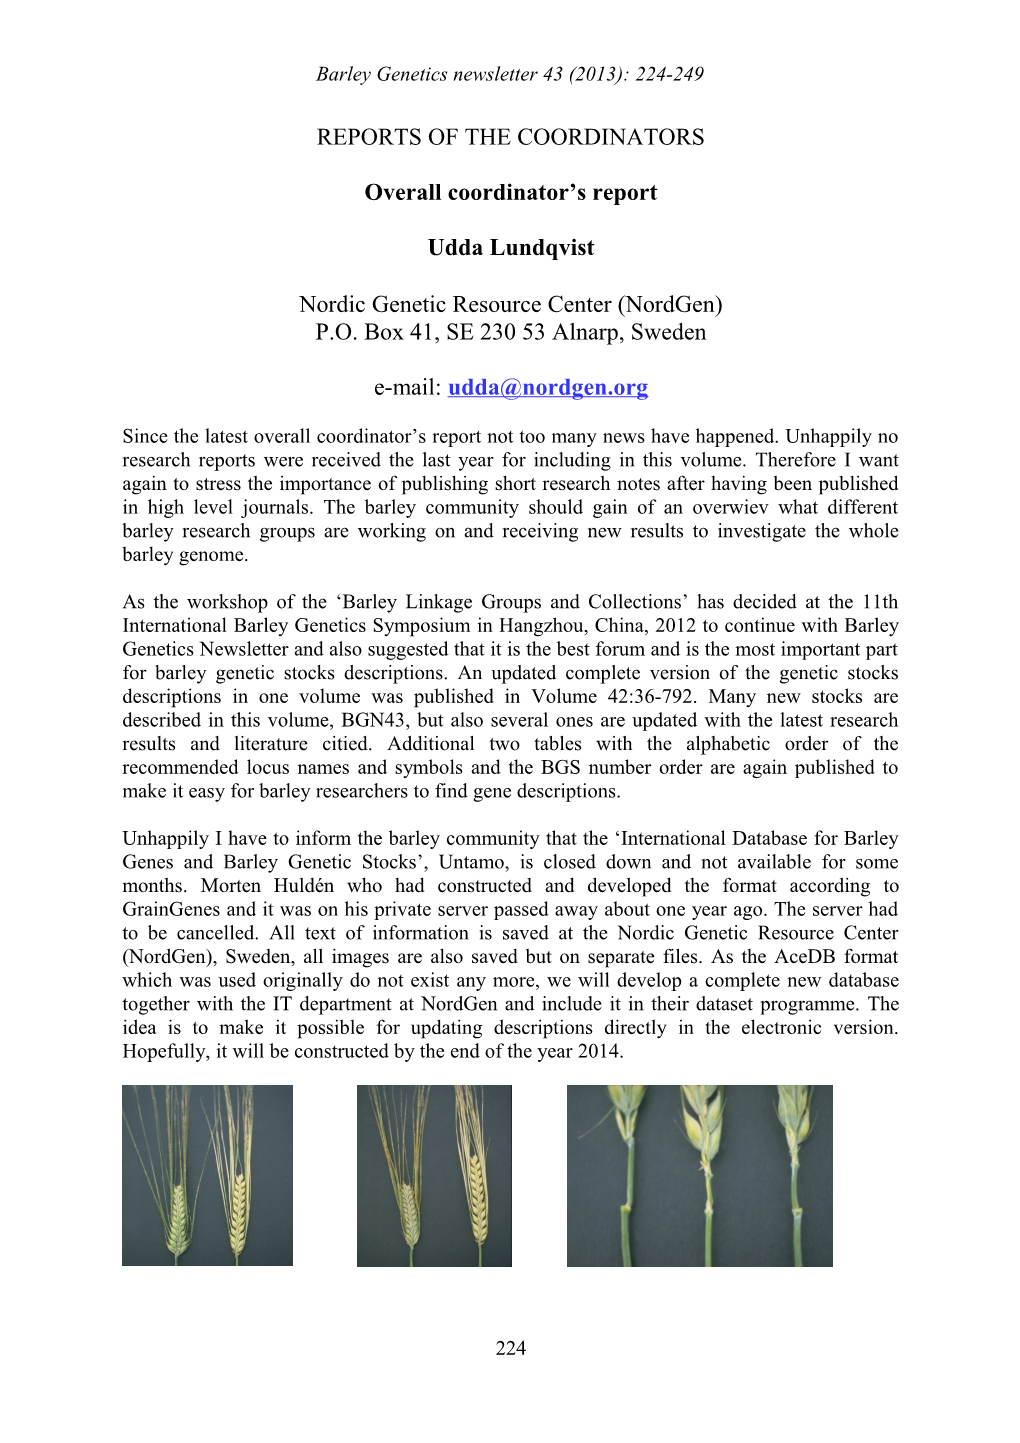 Barley Genetics Newsletter 43 (2013): 224-249